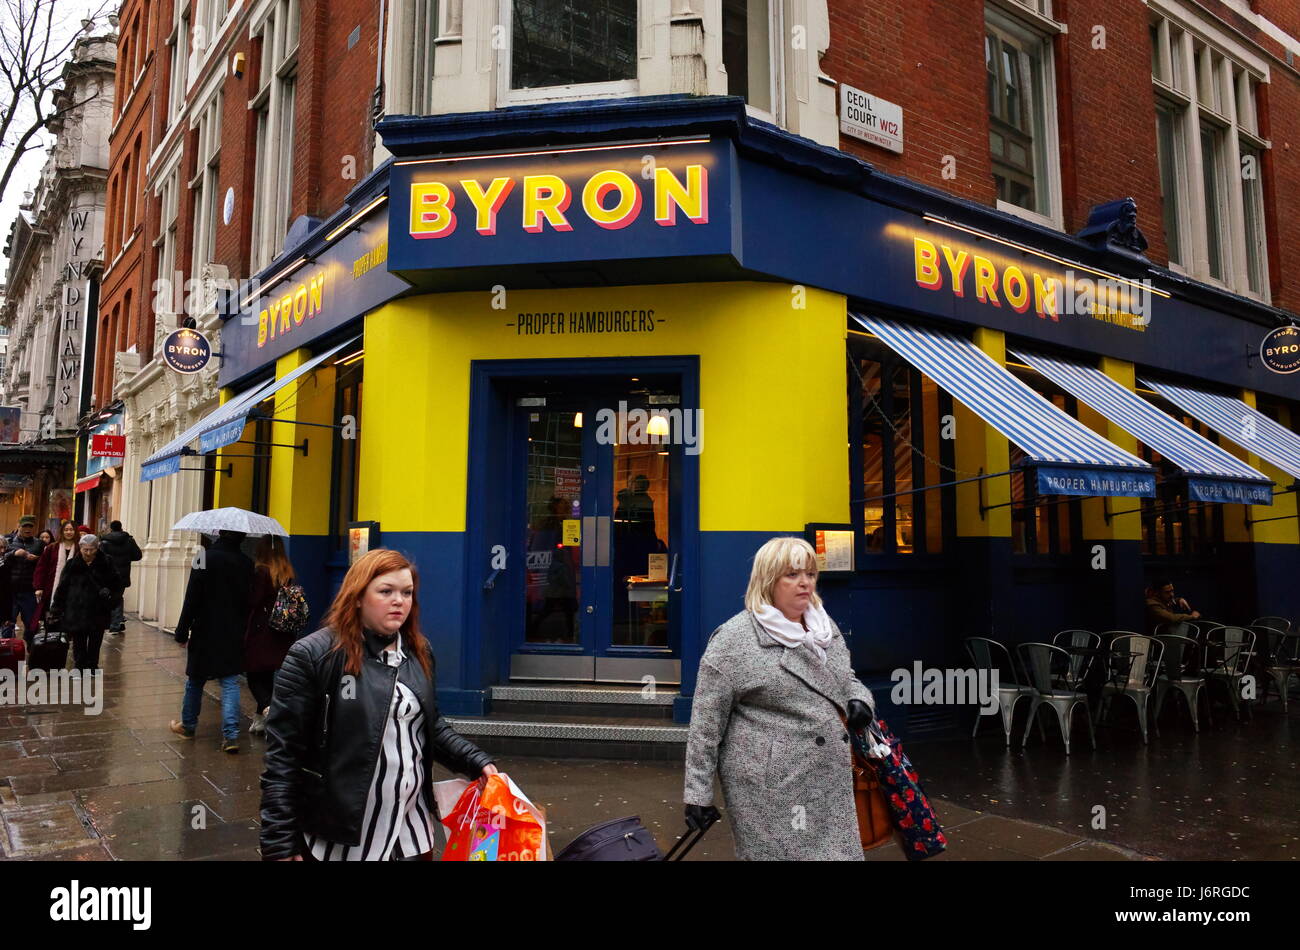 Byron Proper Hamburgers in London, UK Stock Photo